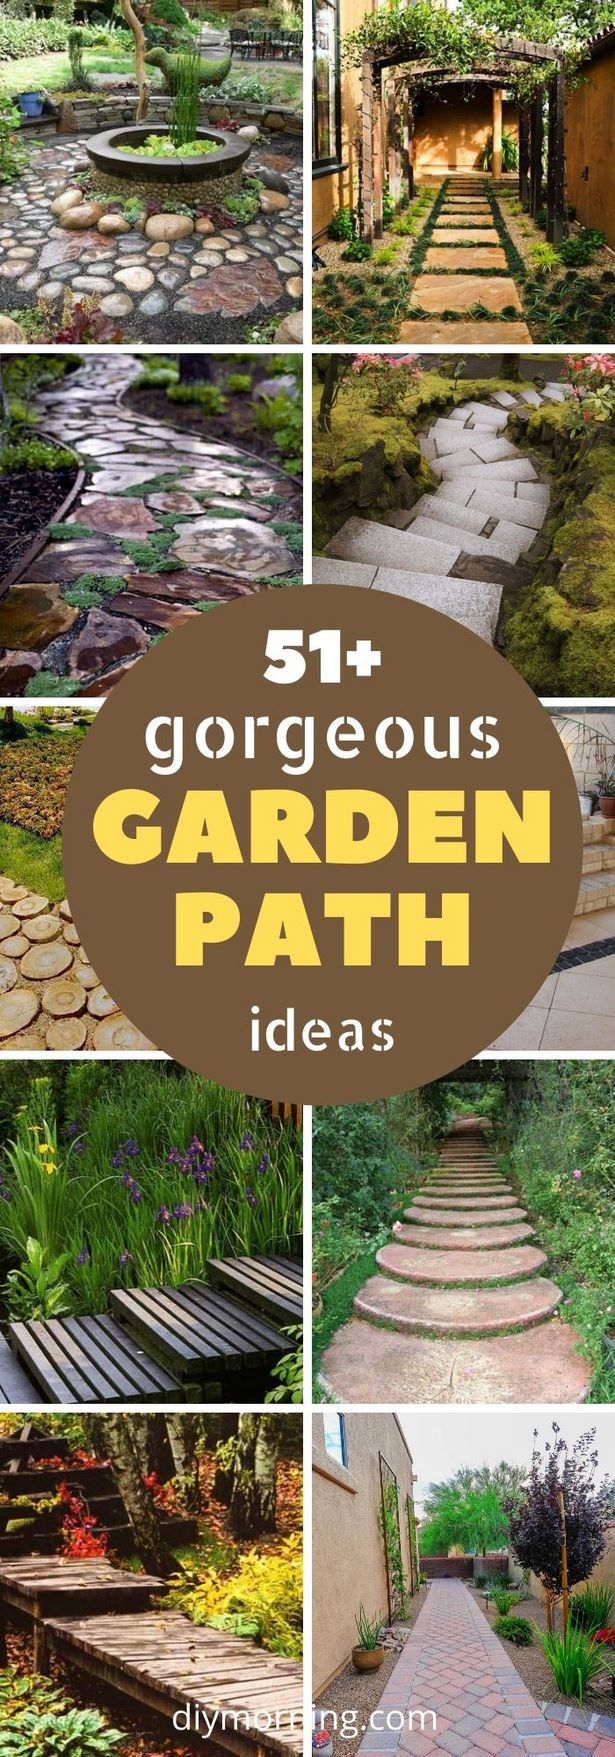 billige-garten-ideen-36_7 Billige Garten-Ideen